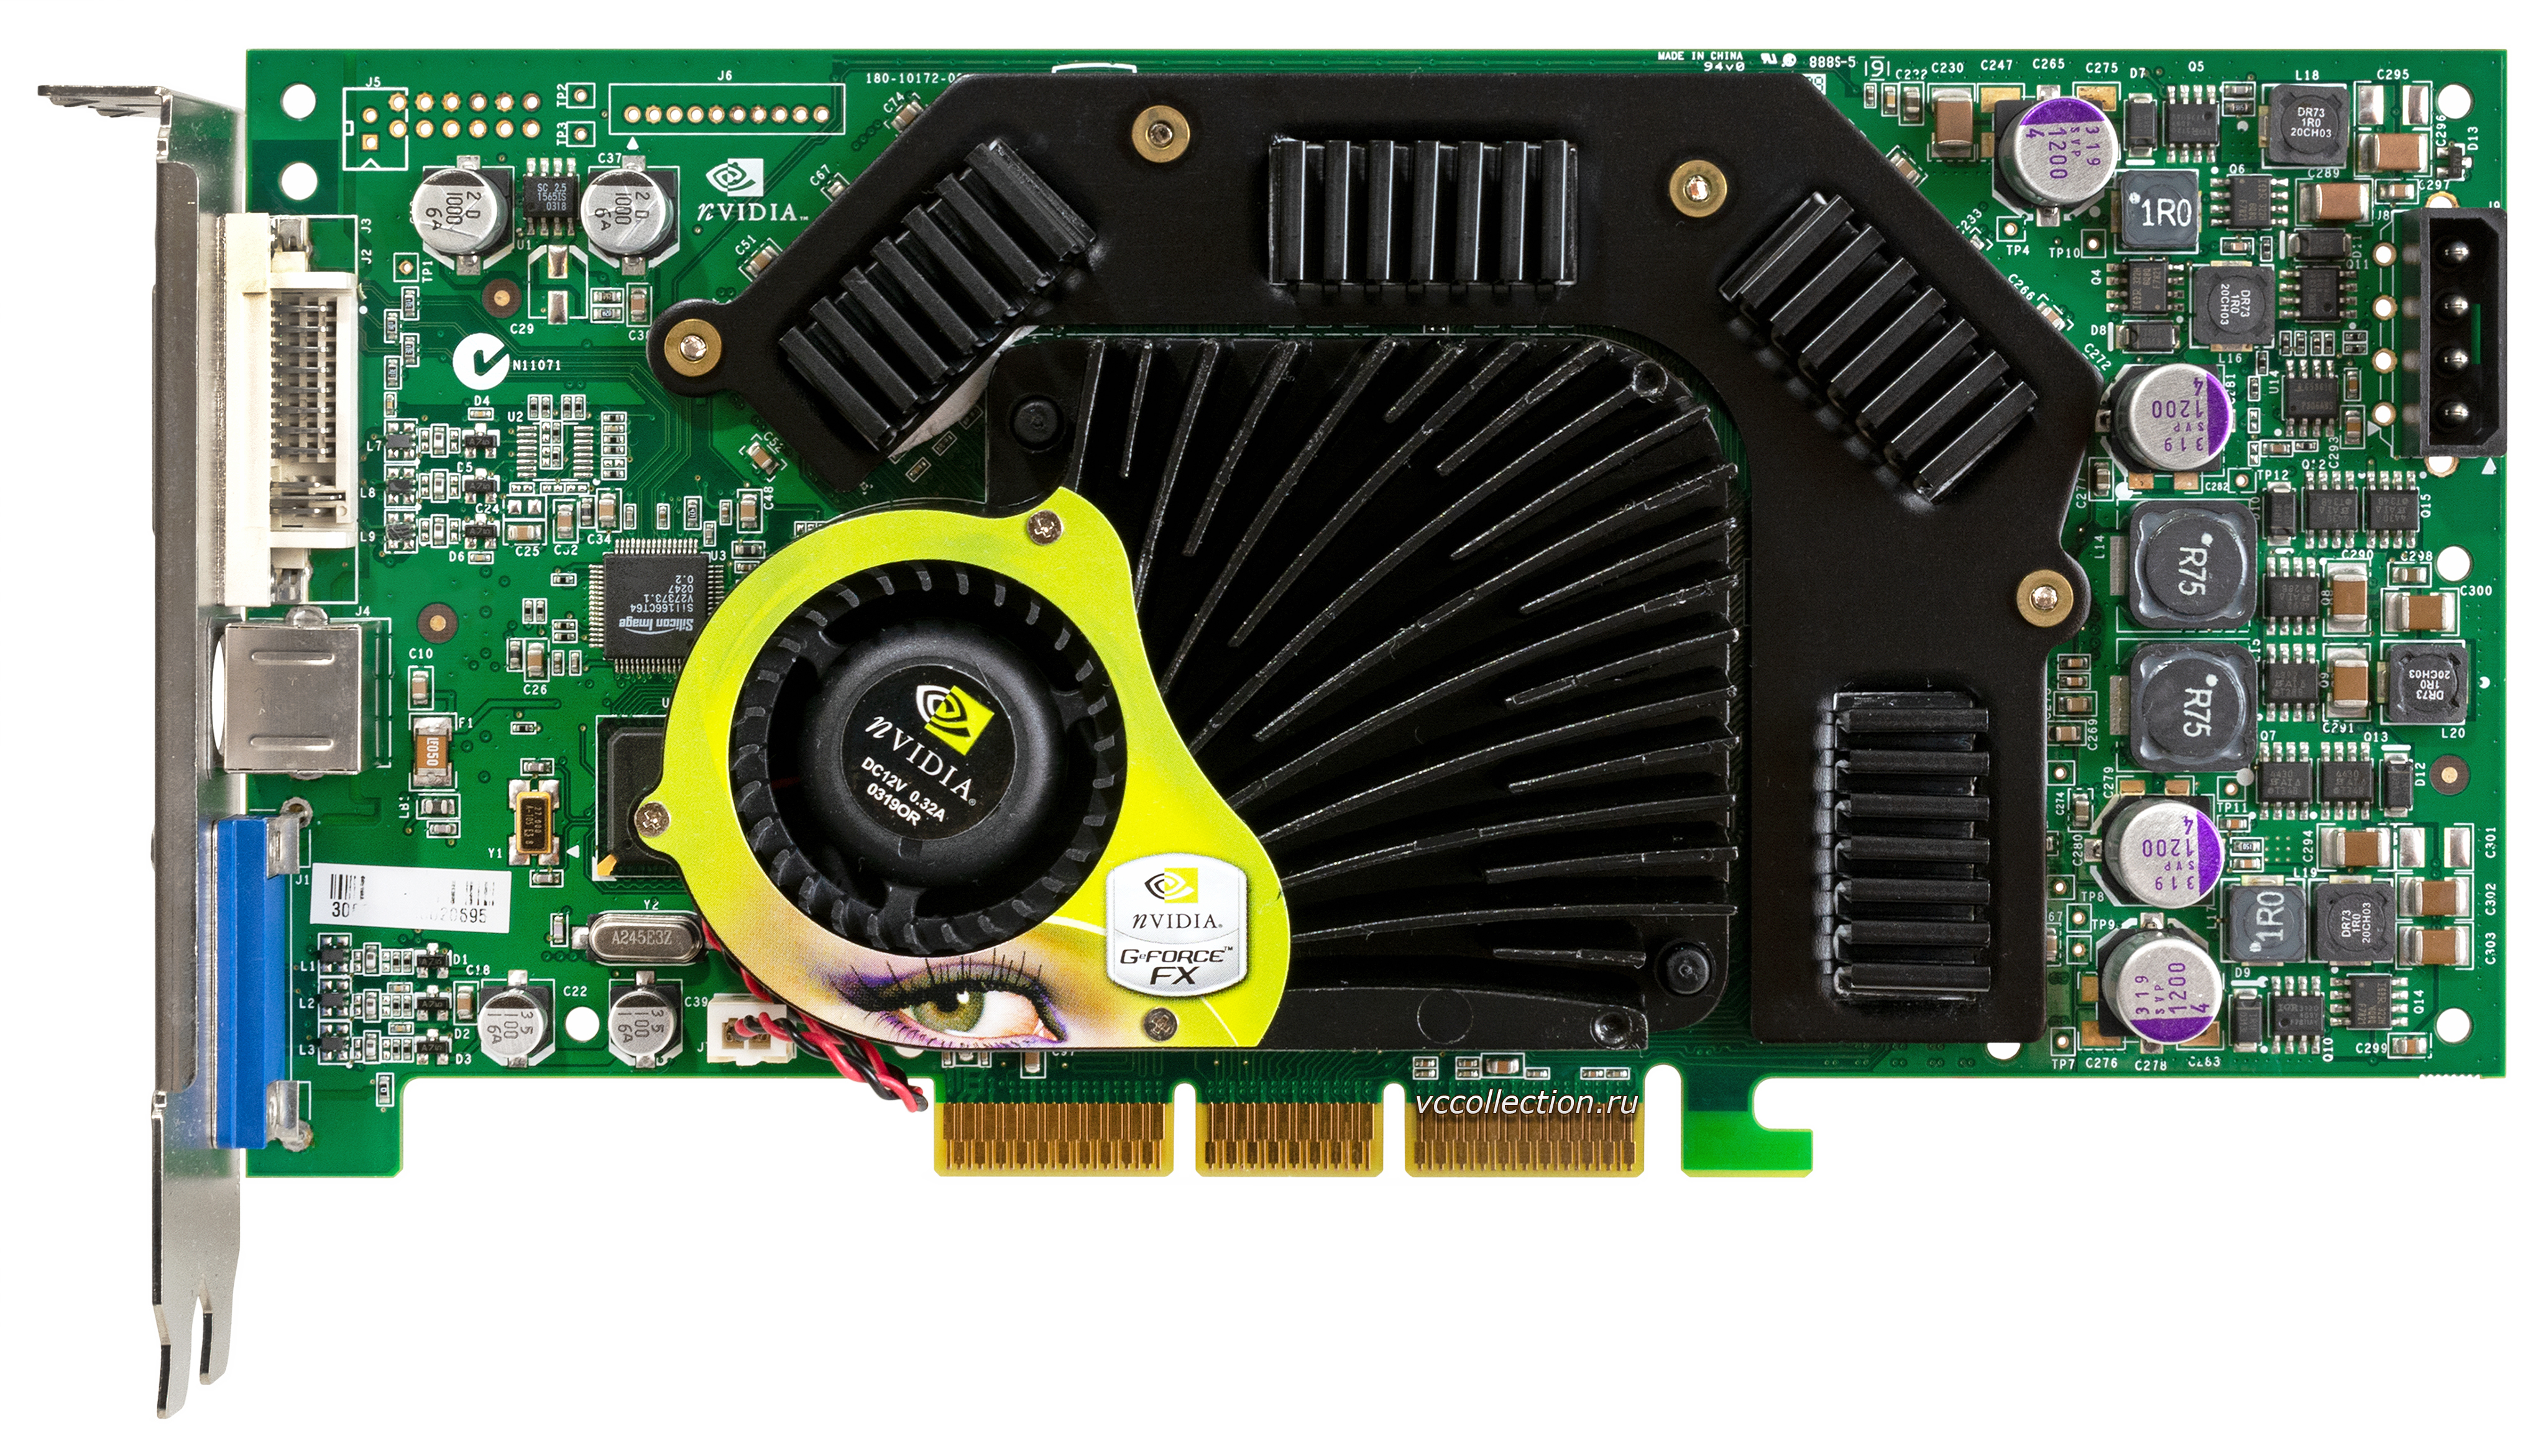 NVidia GeForce FX 5900 Ultra